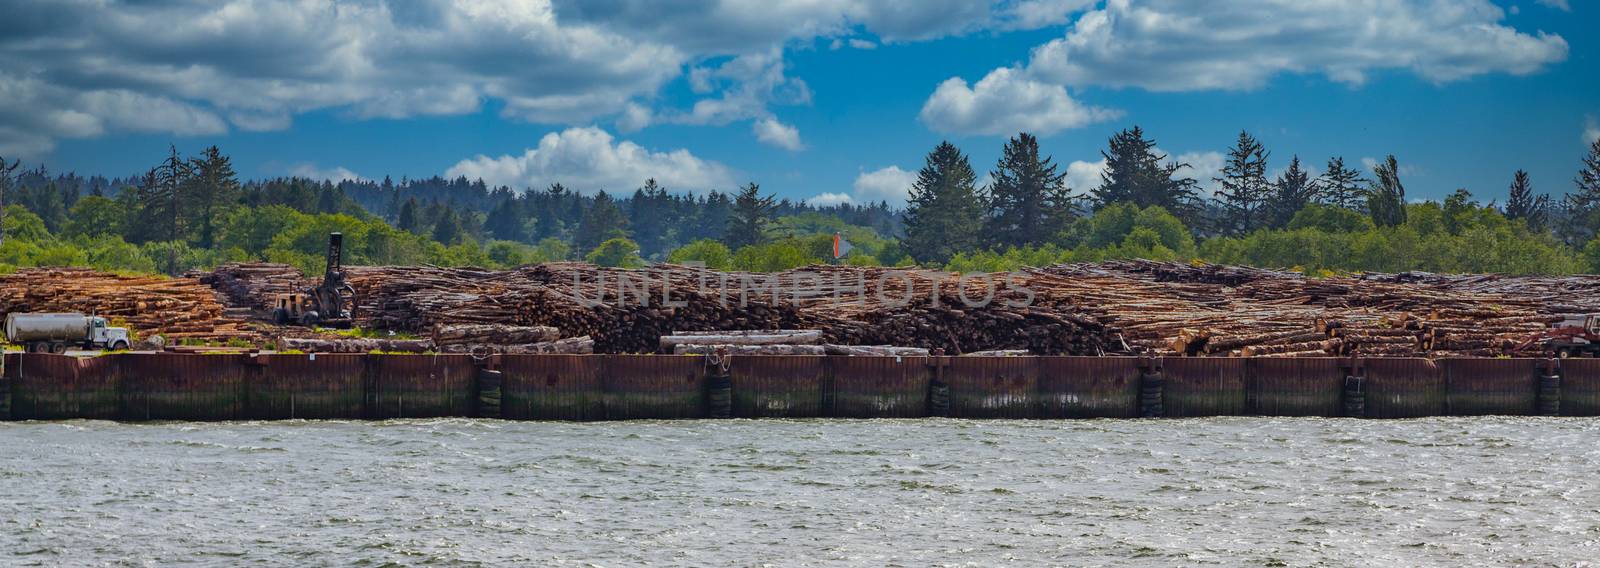 Massive Logging Operation on Oregon Coast